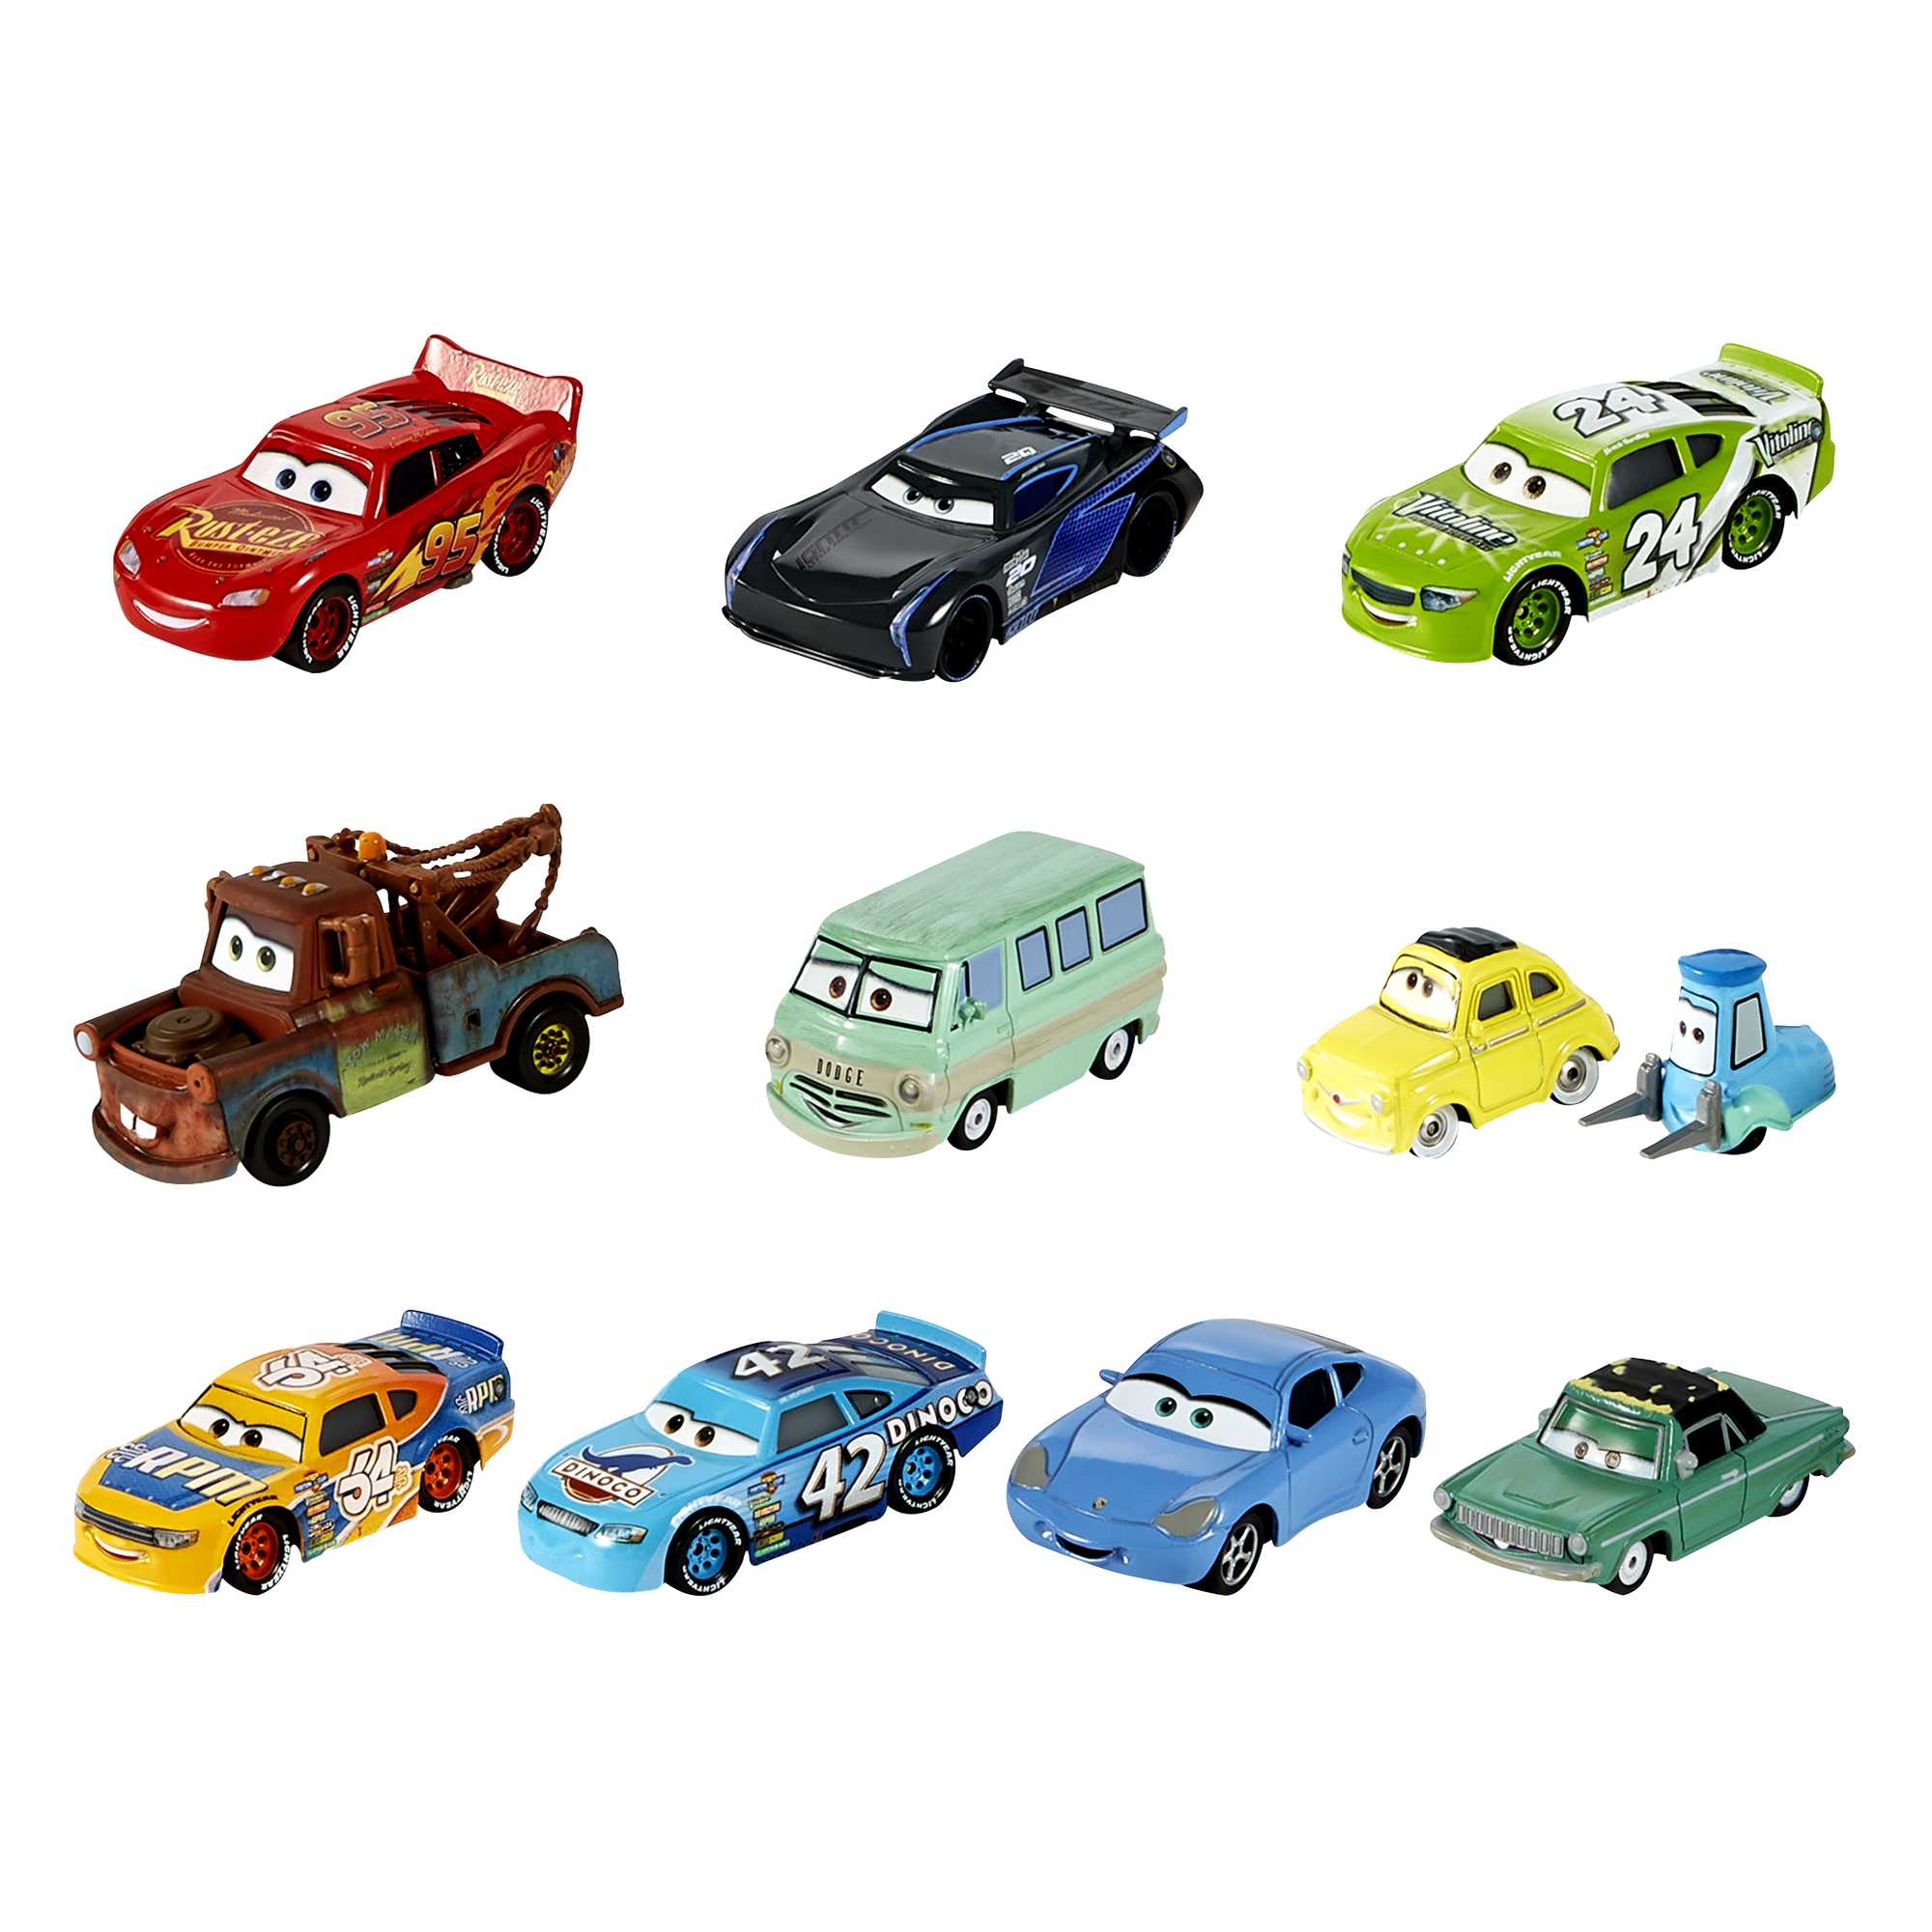 Disney/Pixar Cars 3 Die-cast Dot-com 10-Pack